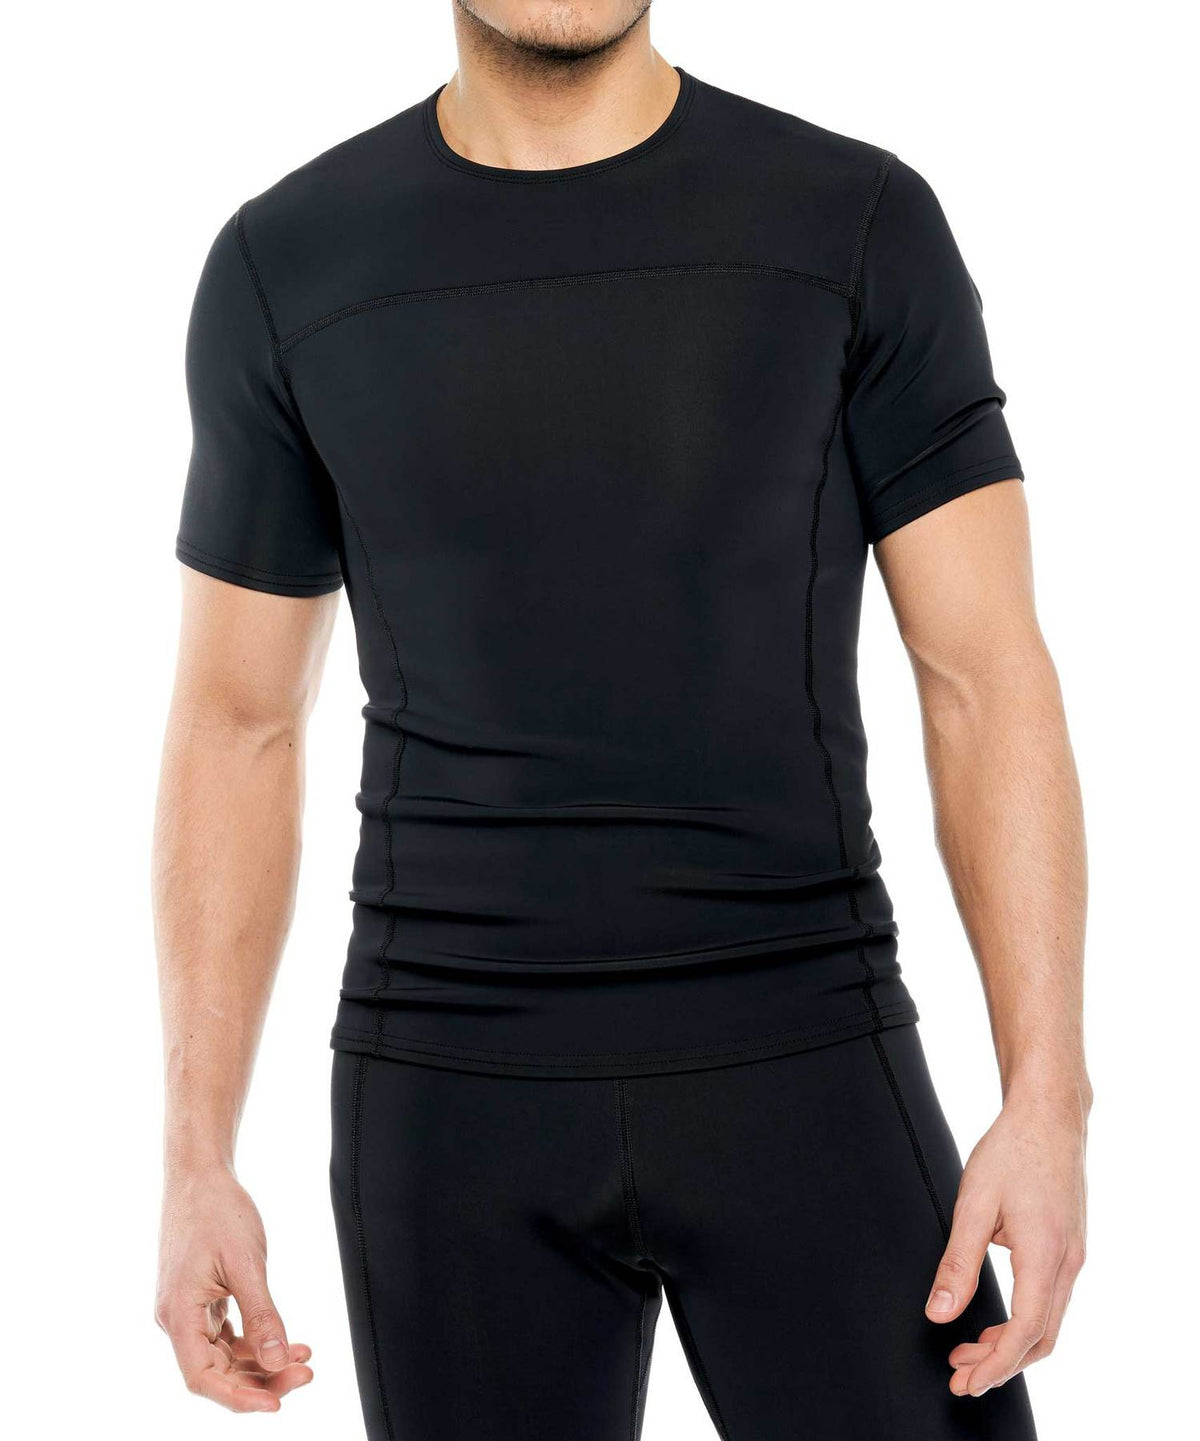 Men’s HeatReflect™ Compression Shirt